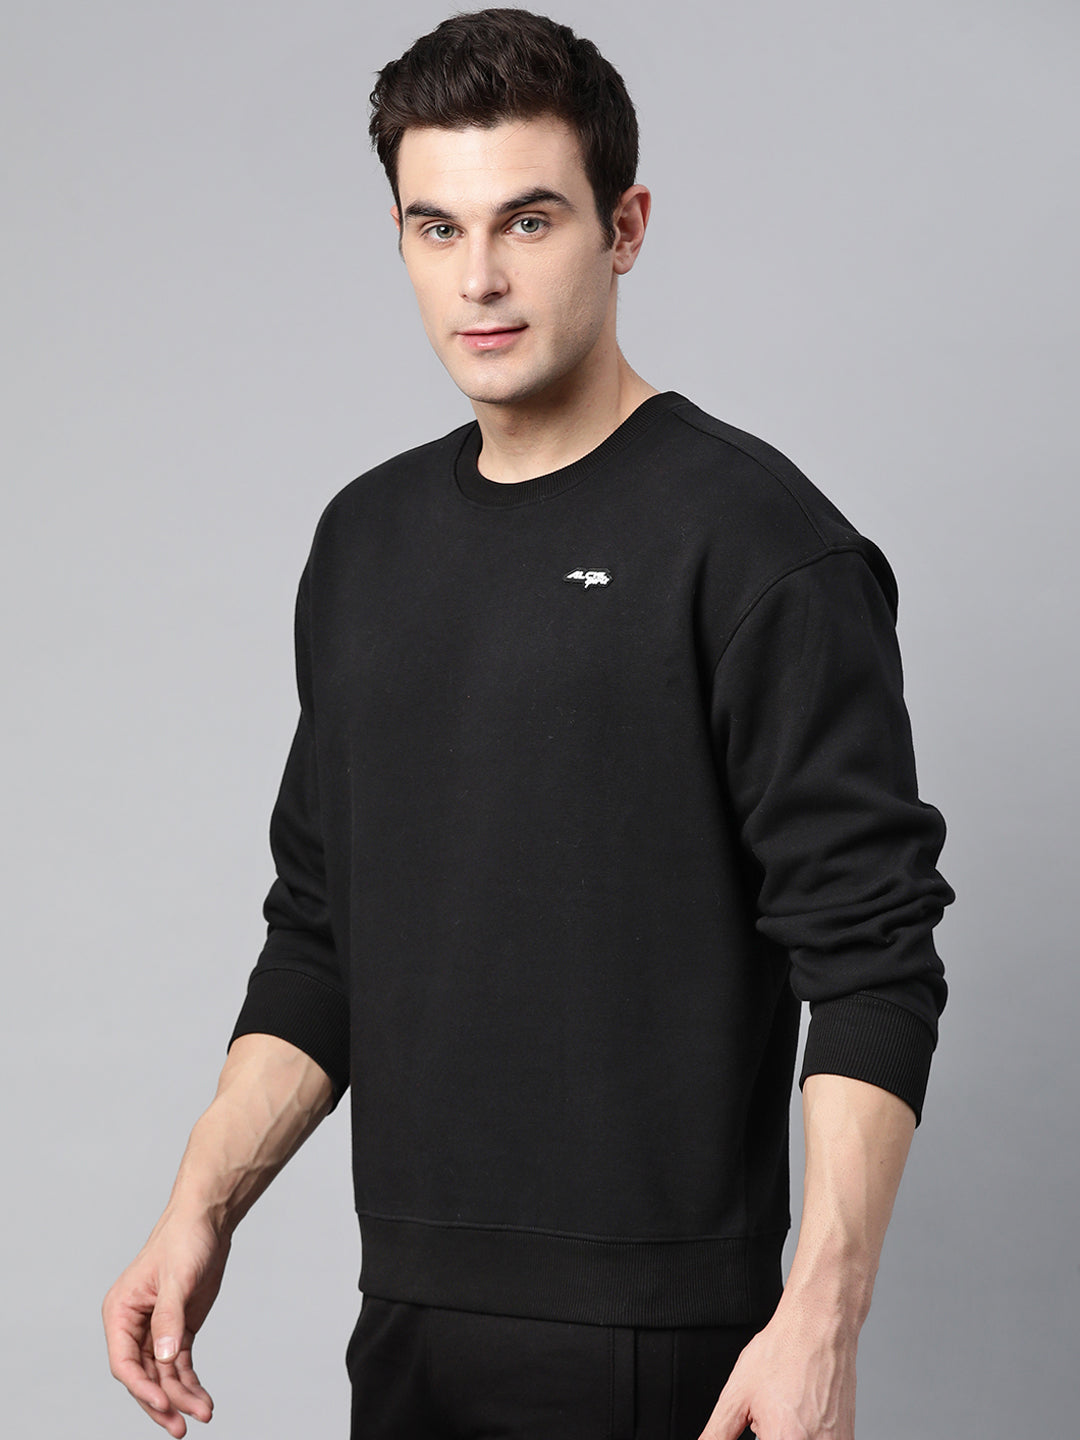 Alcis Men Typography Printed Full Sleeves Pullover Sweatshirt